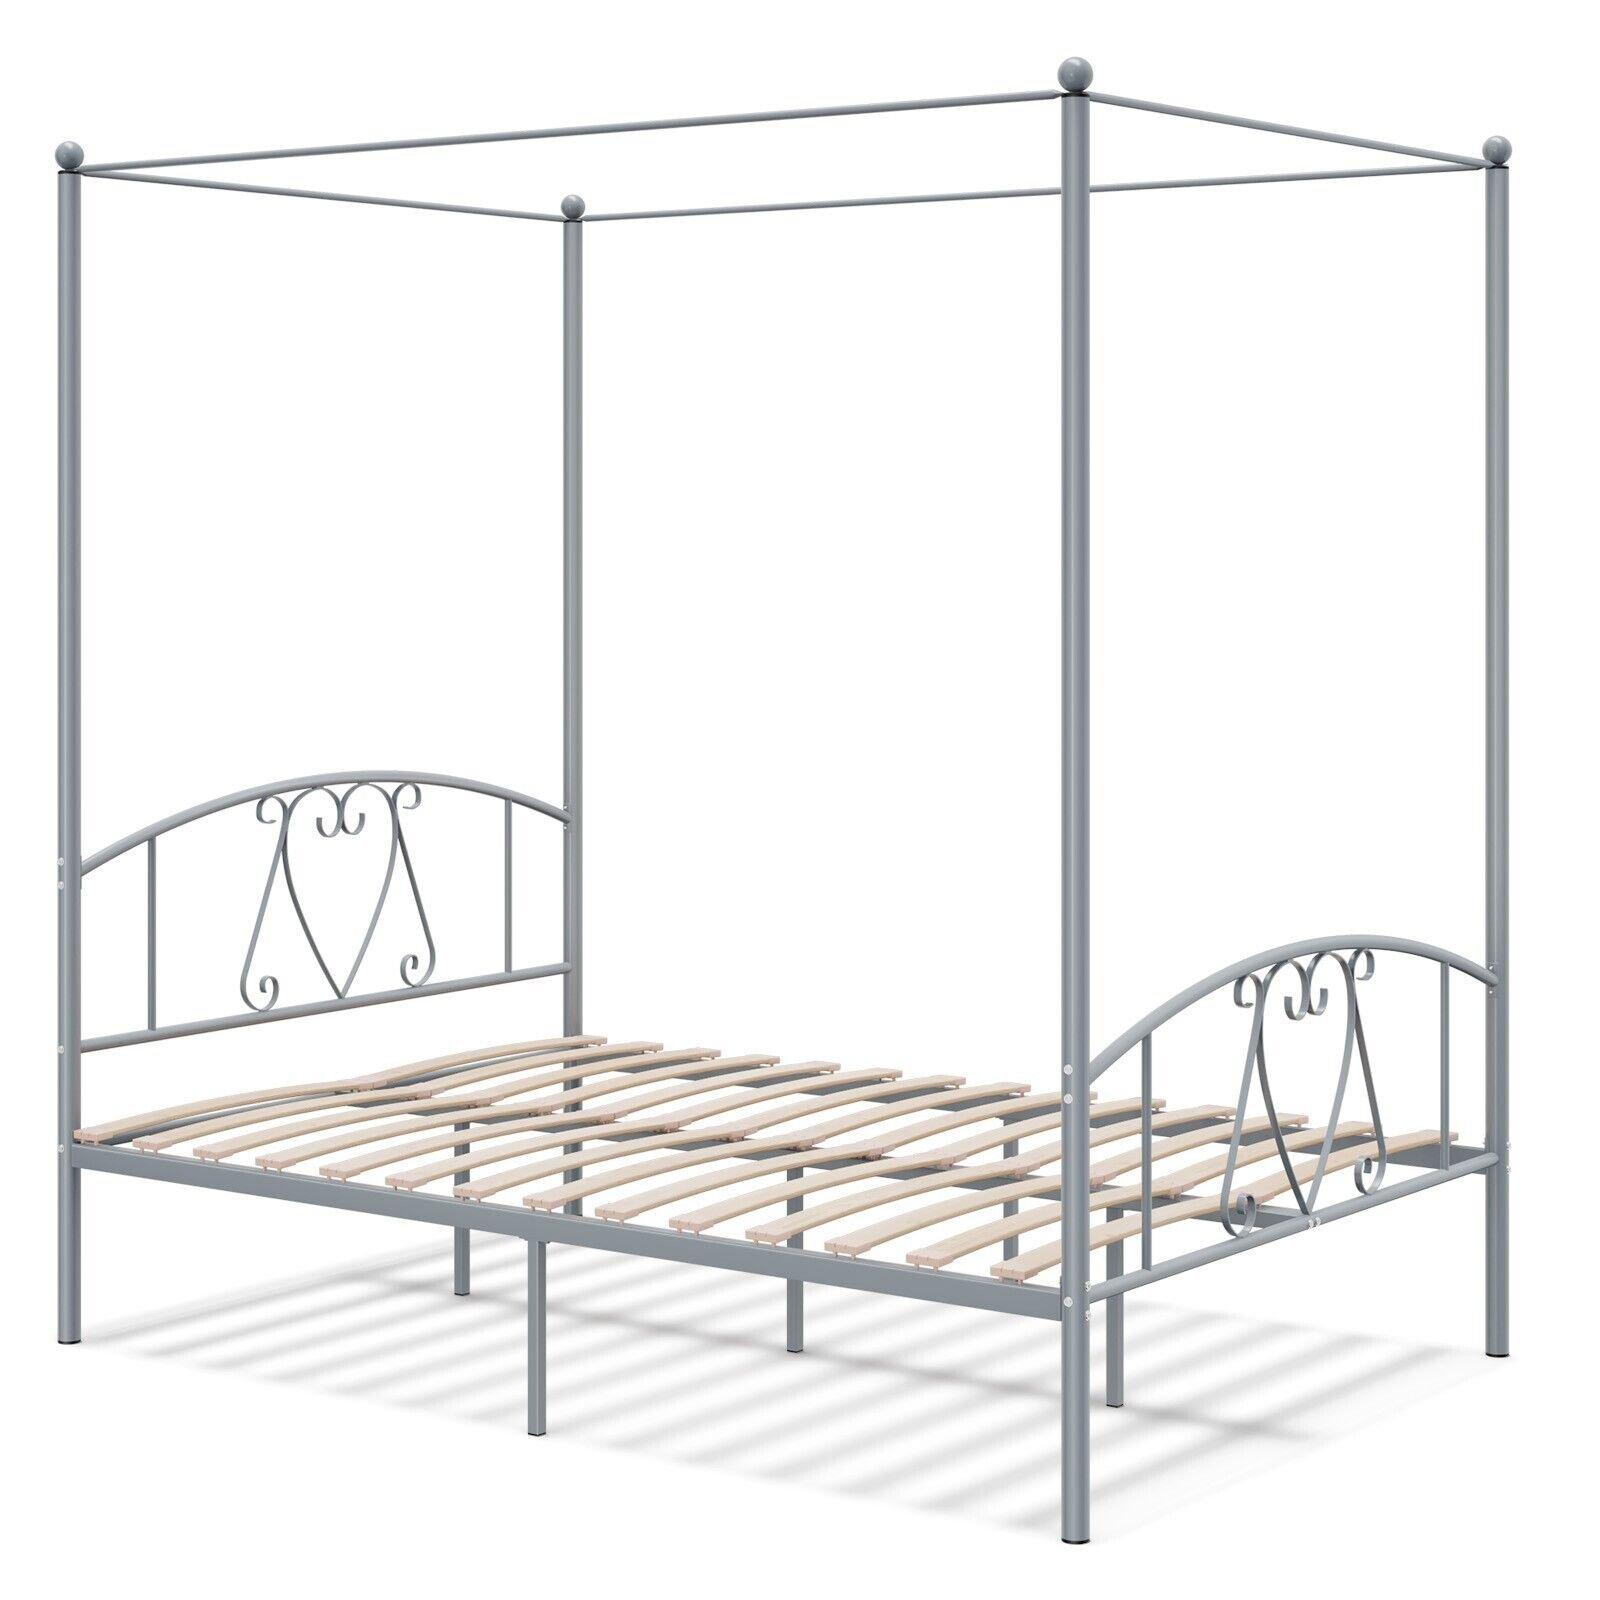 Double Size Metal Canopy Bed Frame 4-Poster Modern Platform Wooden Slat Support